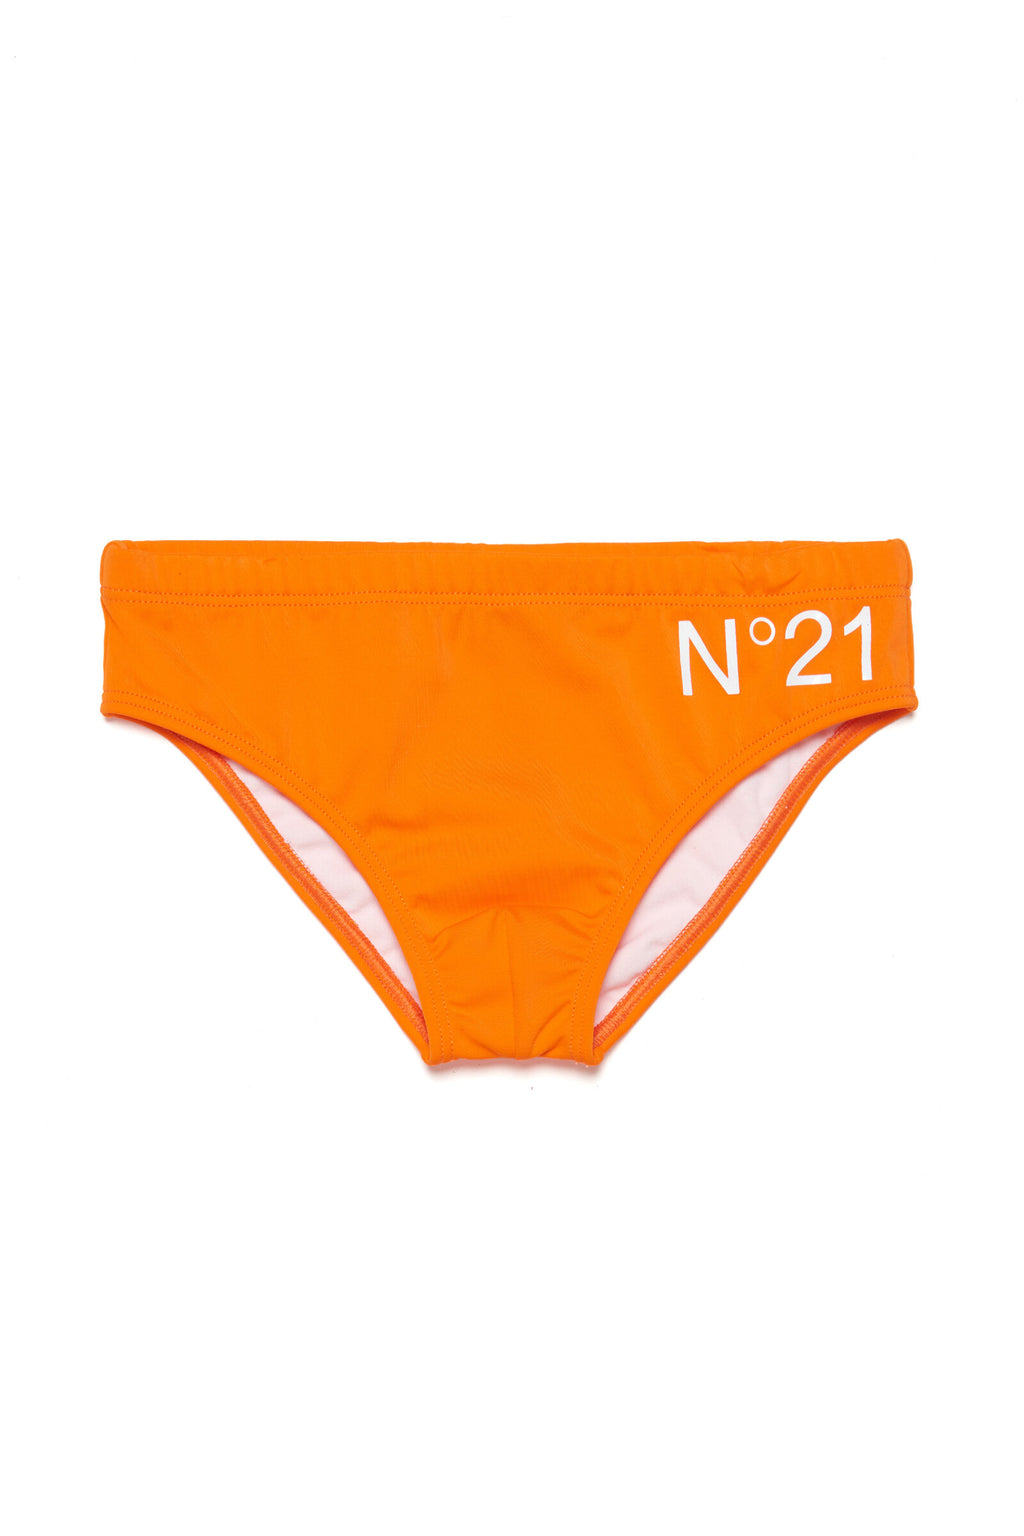 Fluo orange lycra swim brief with logo